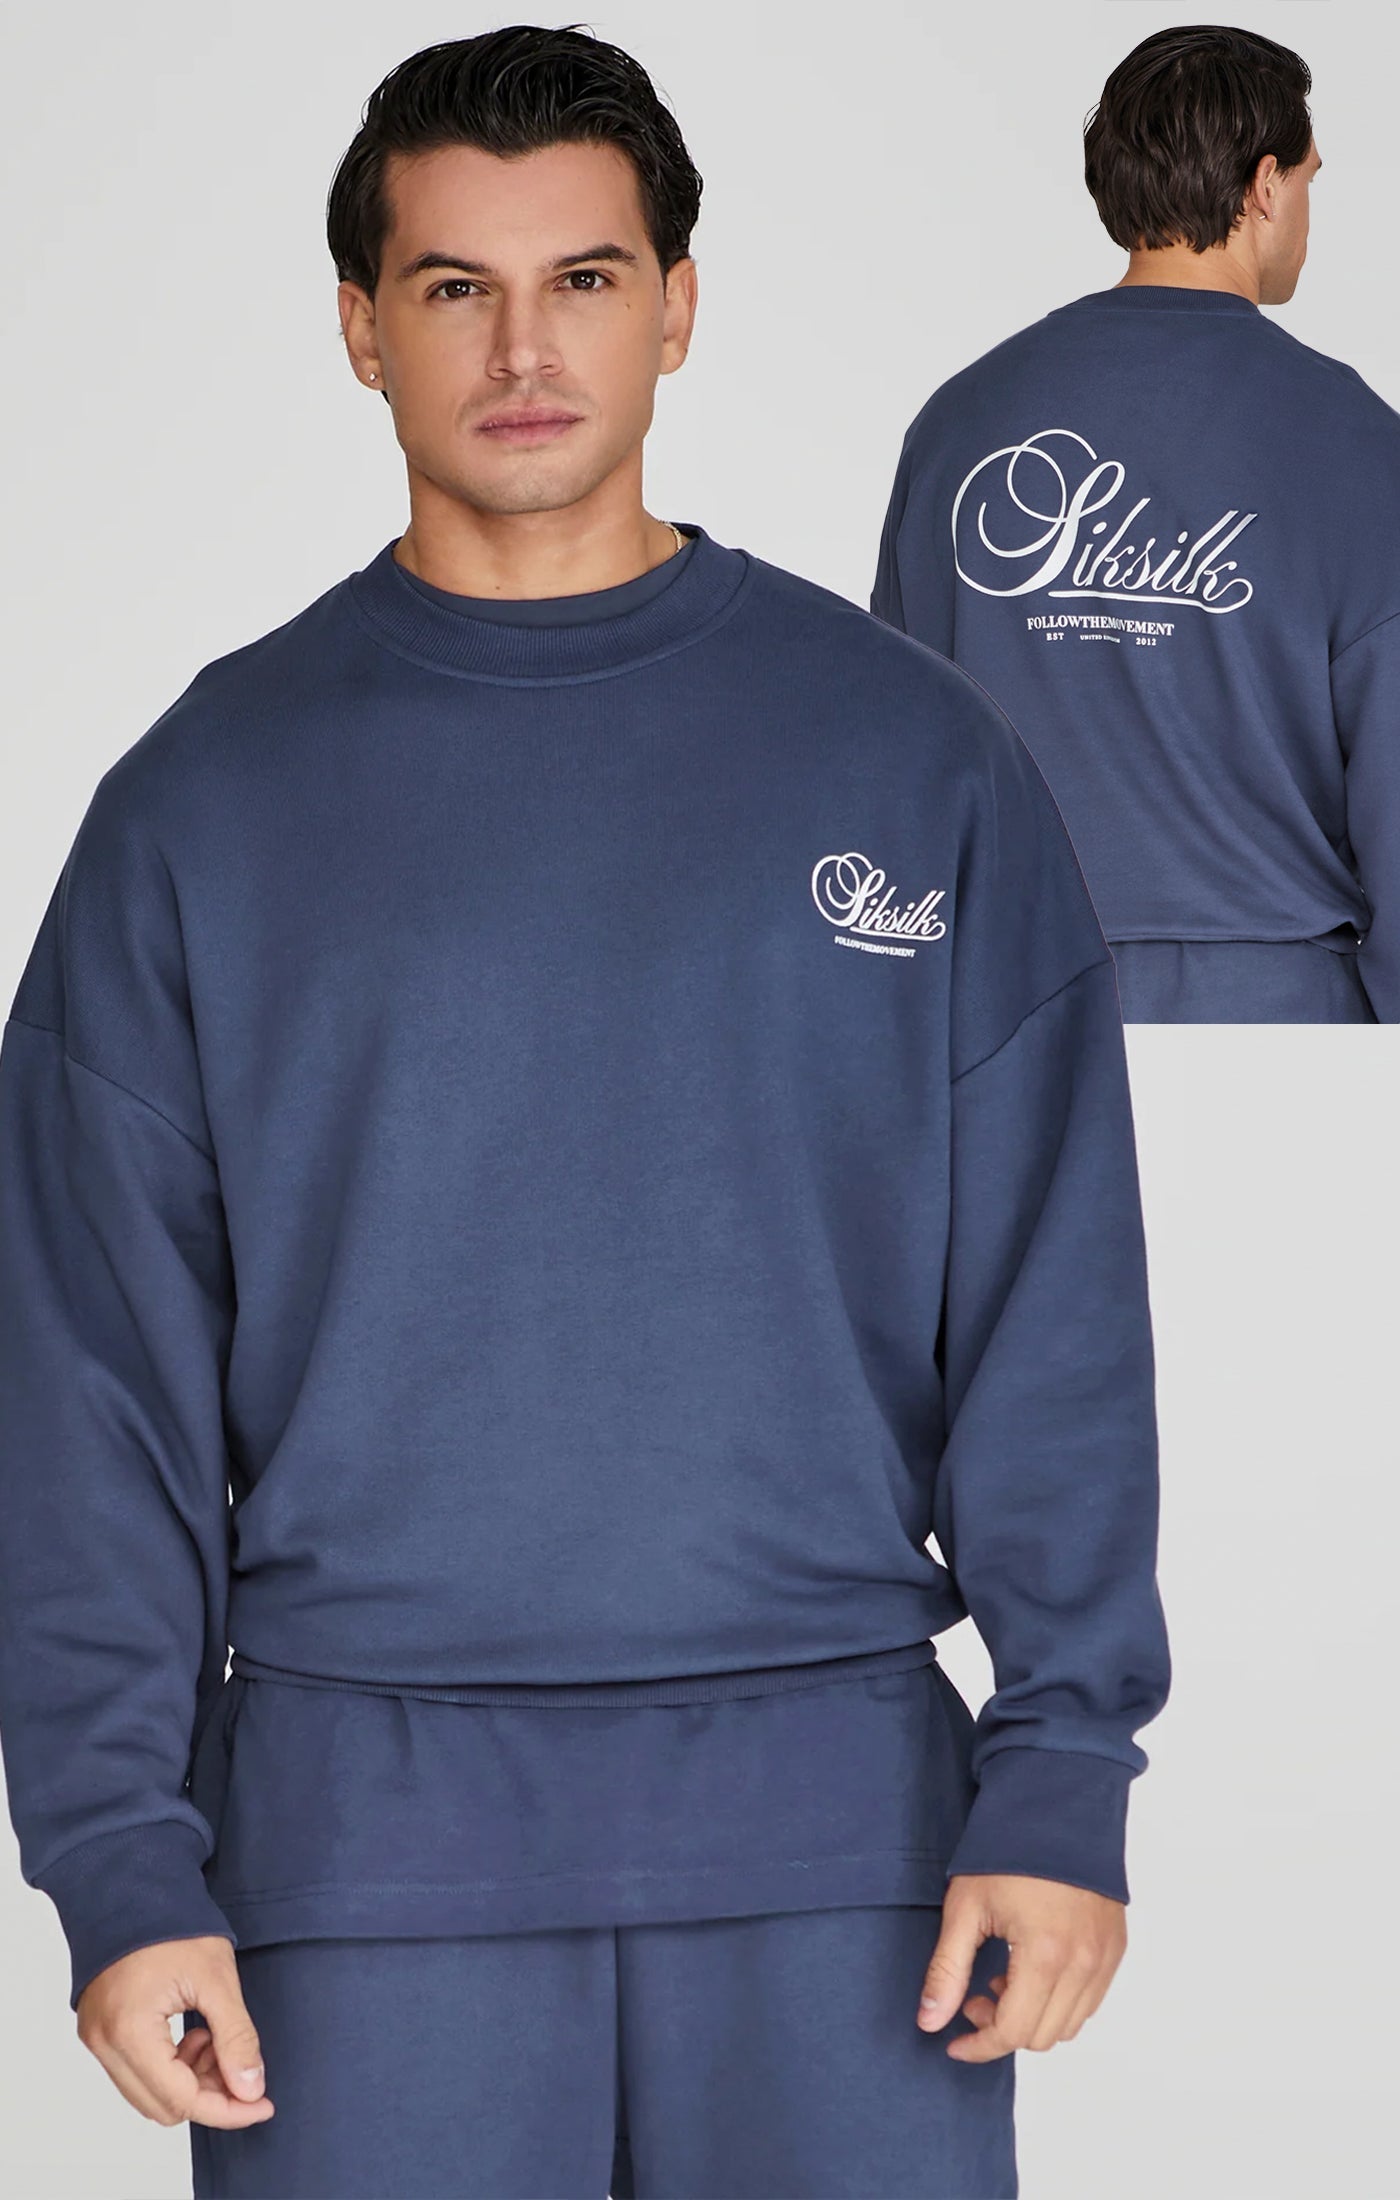 Graphic Sweater in Navy Sweatshirts SikSilk   